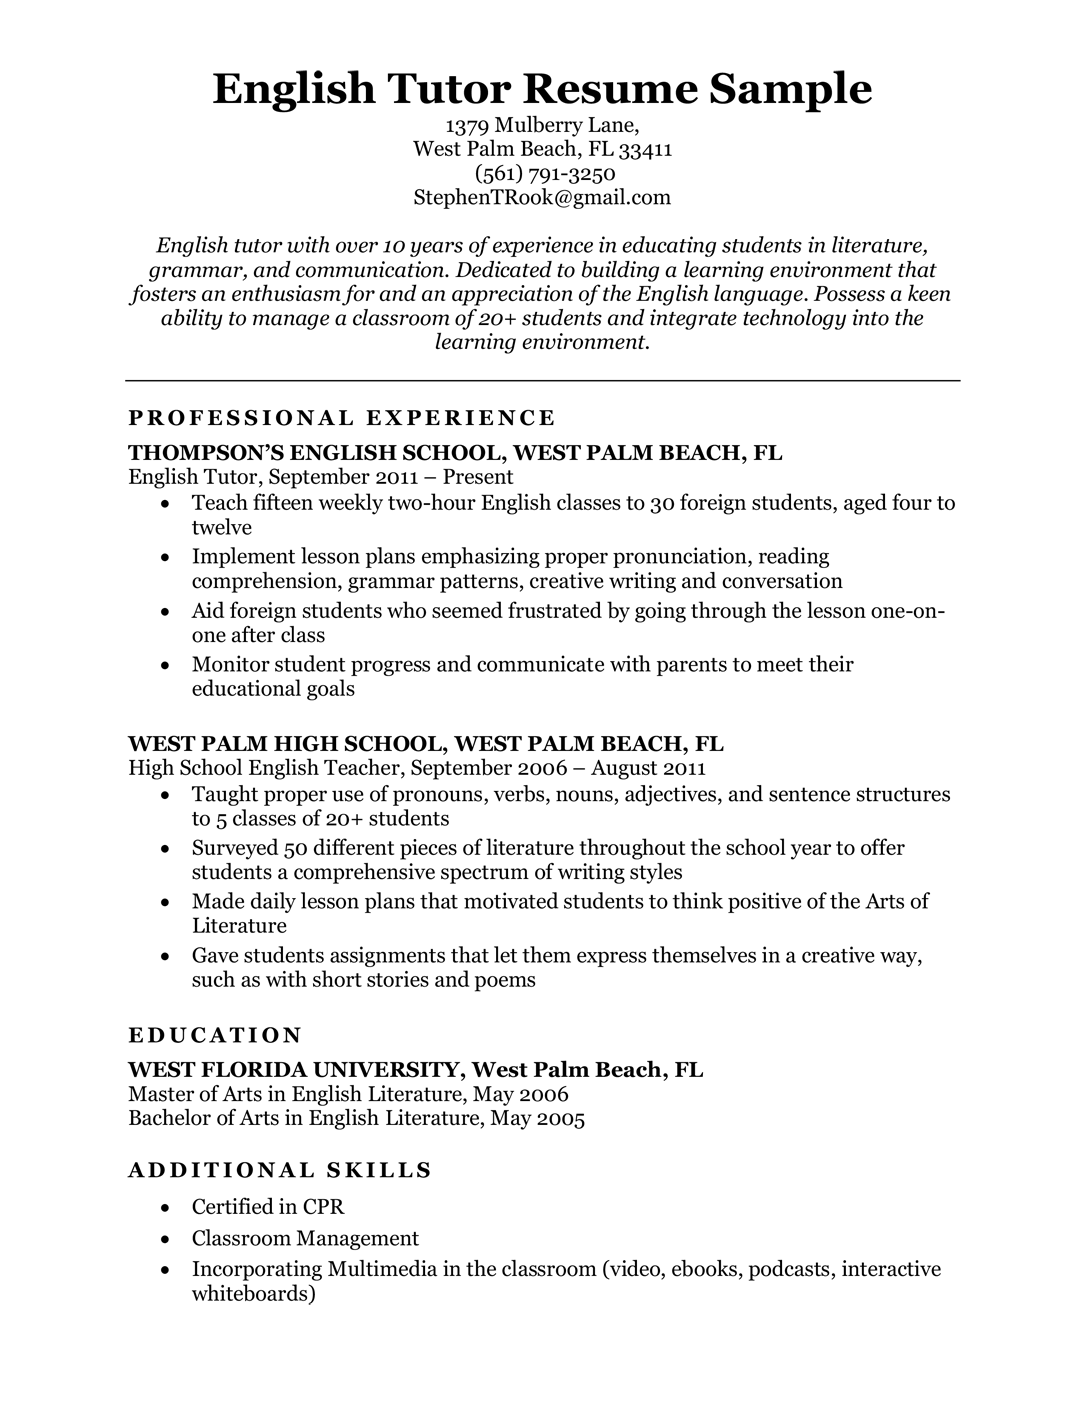 English tutor resume sample